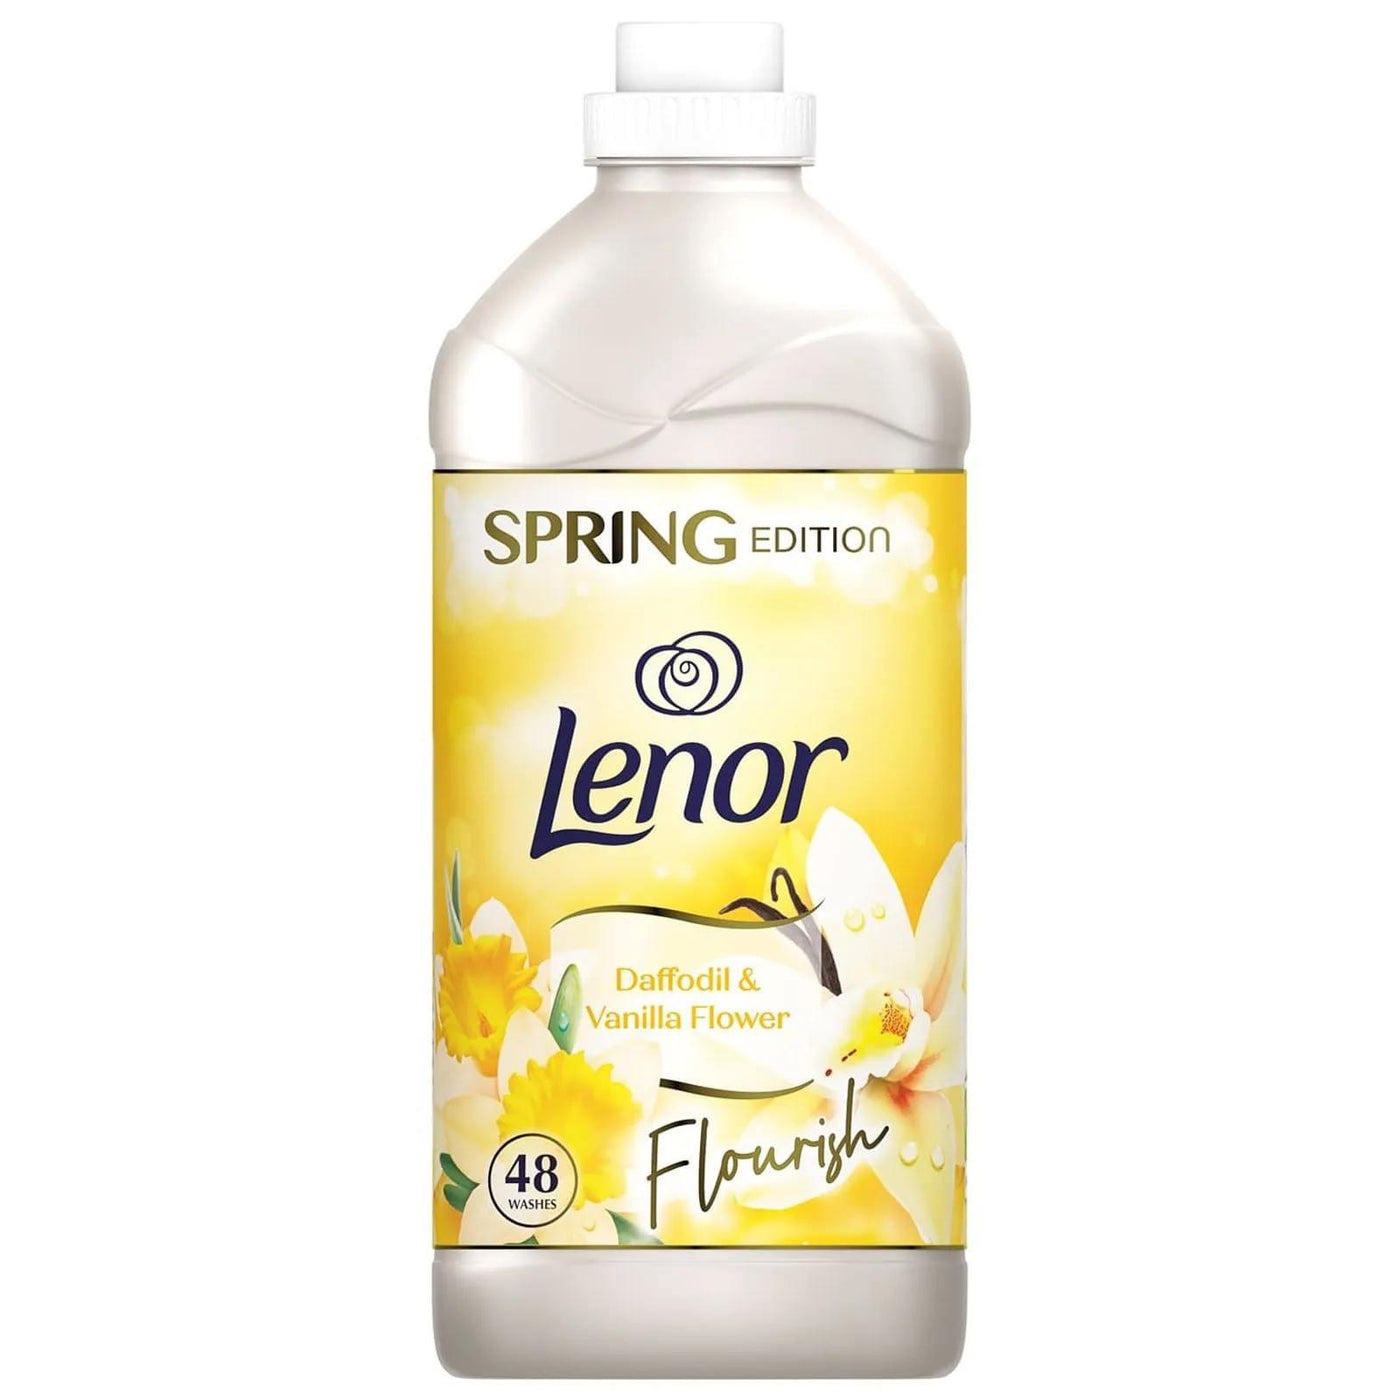 Leanor Daffodil & Vanilla Flower Fragrance Oil